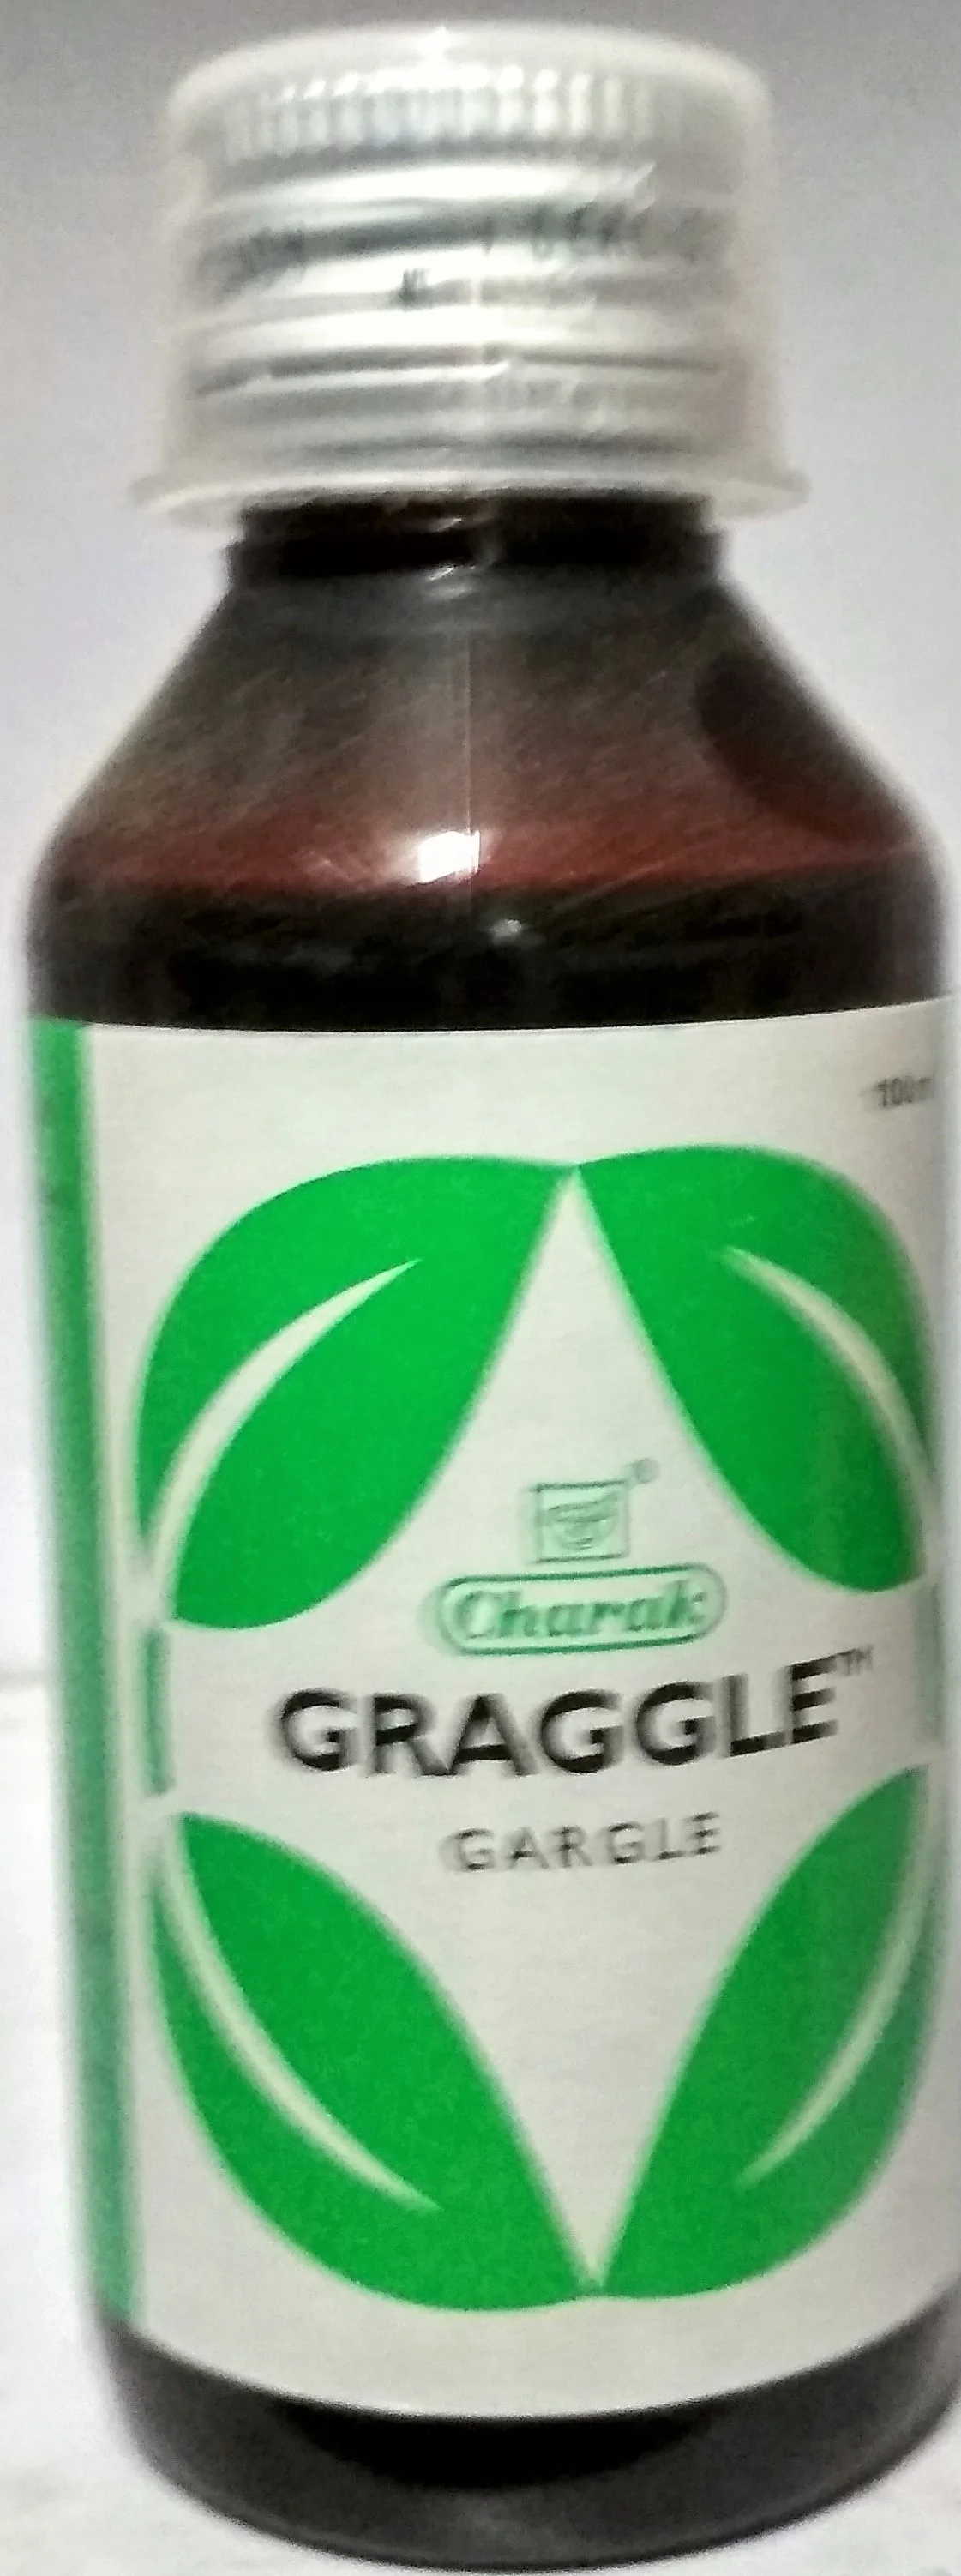 graggle 100 ml Charak Pharma Mumbai